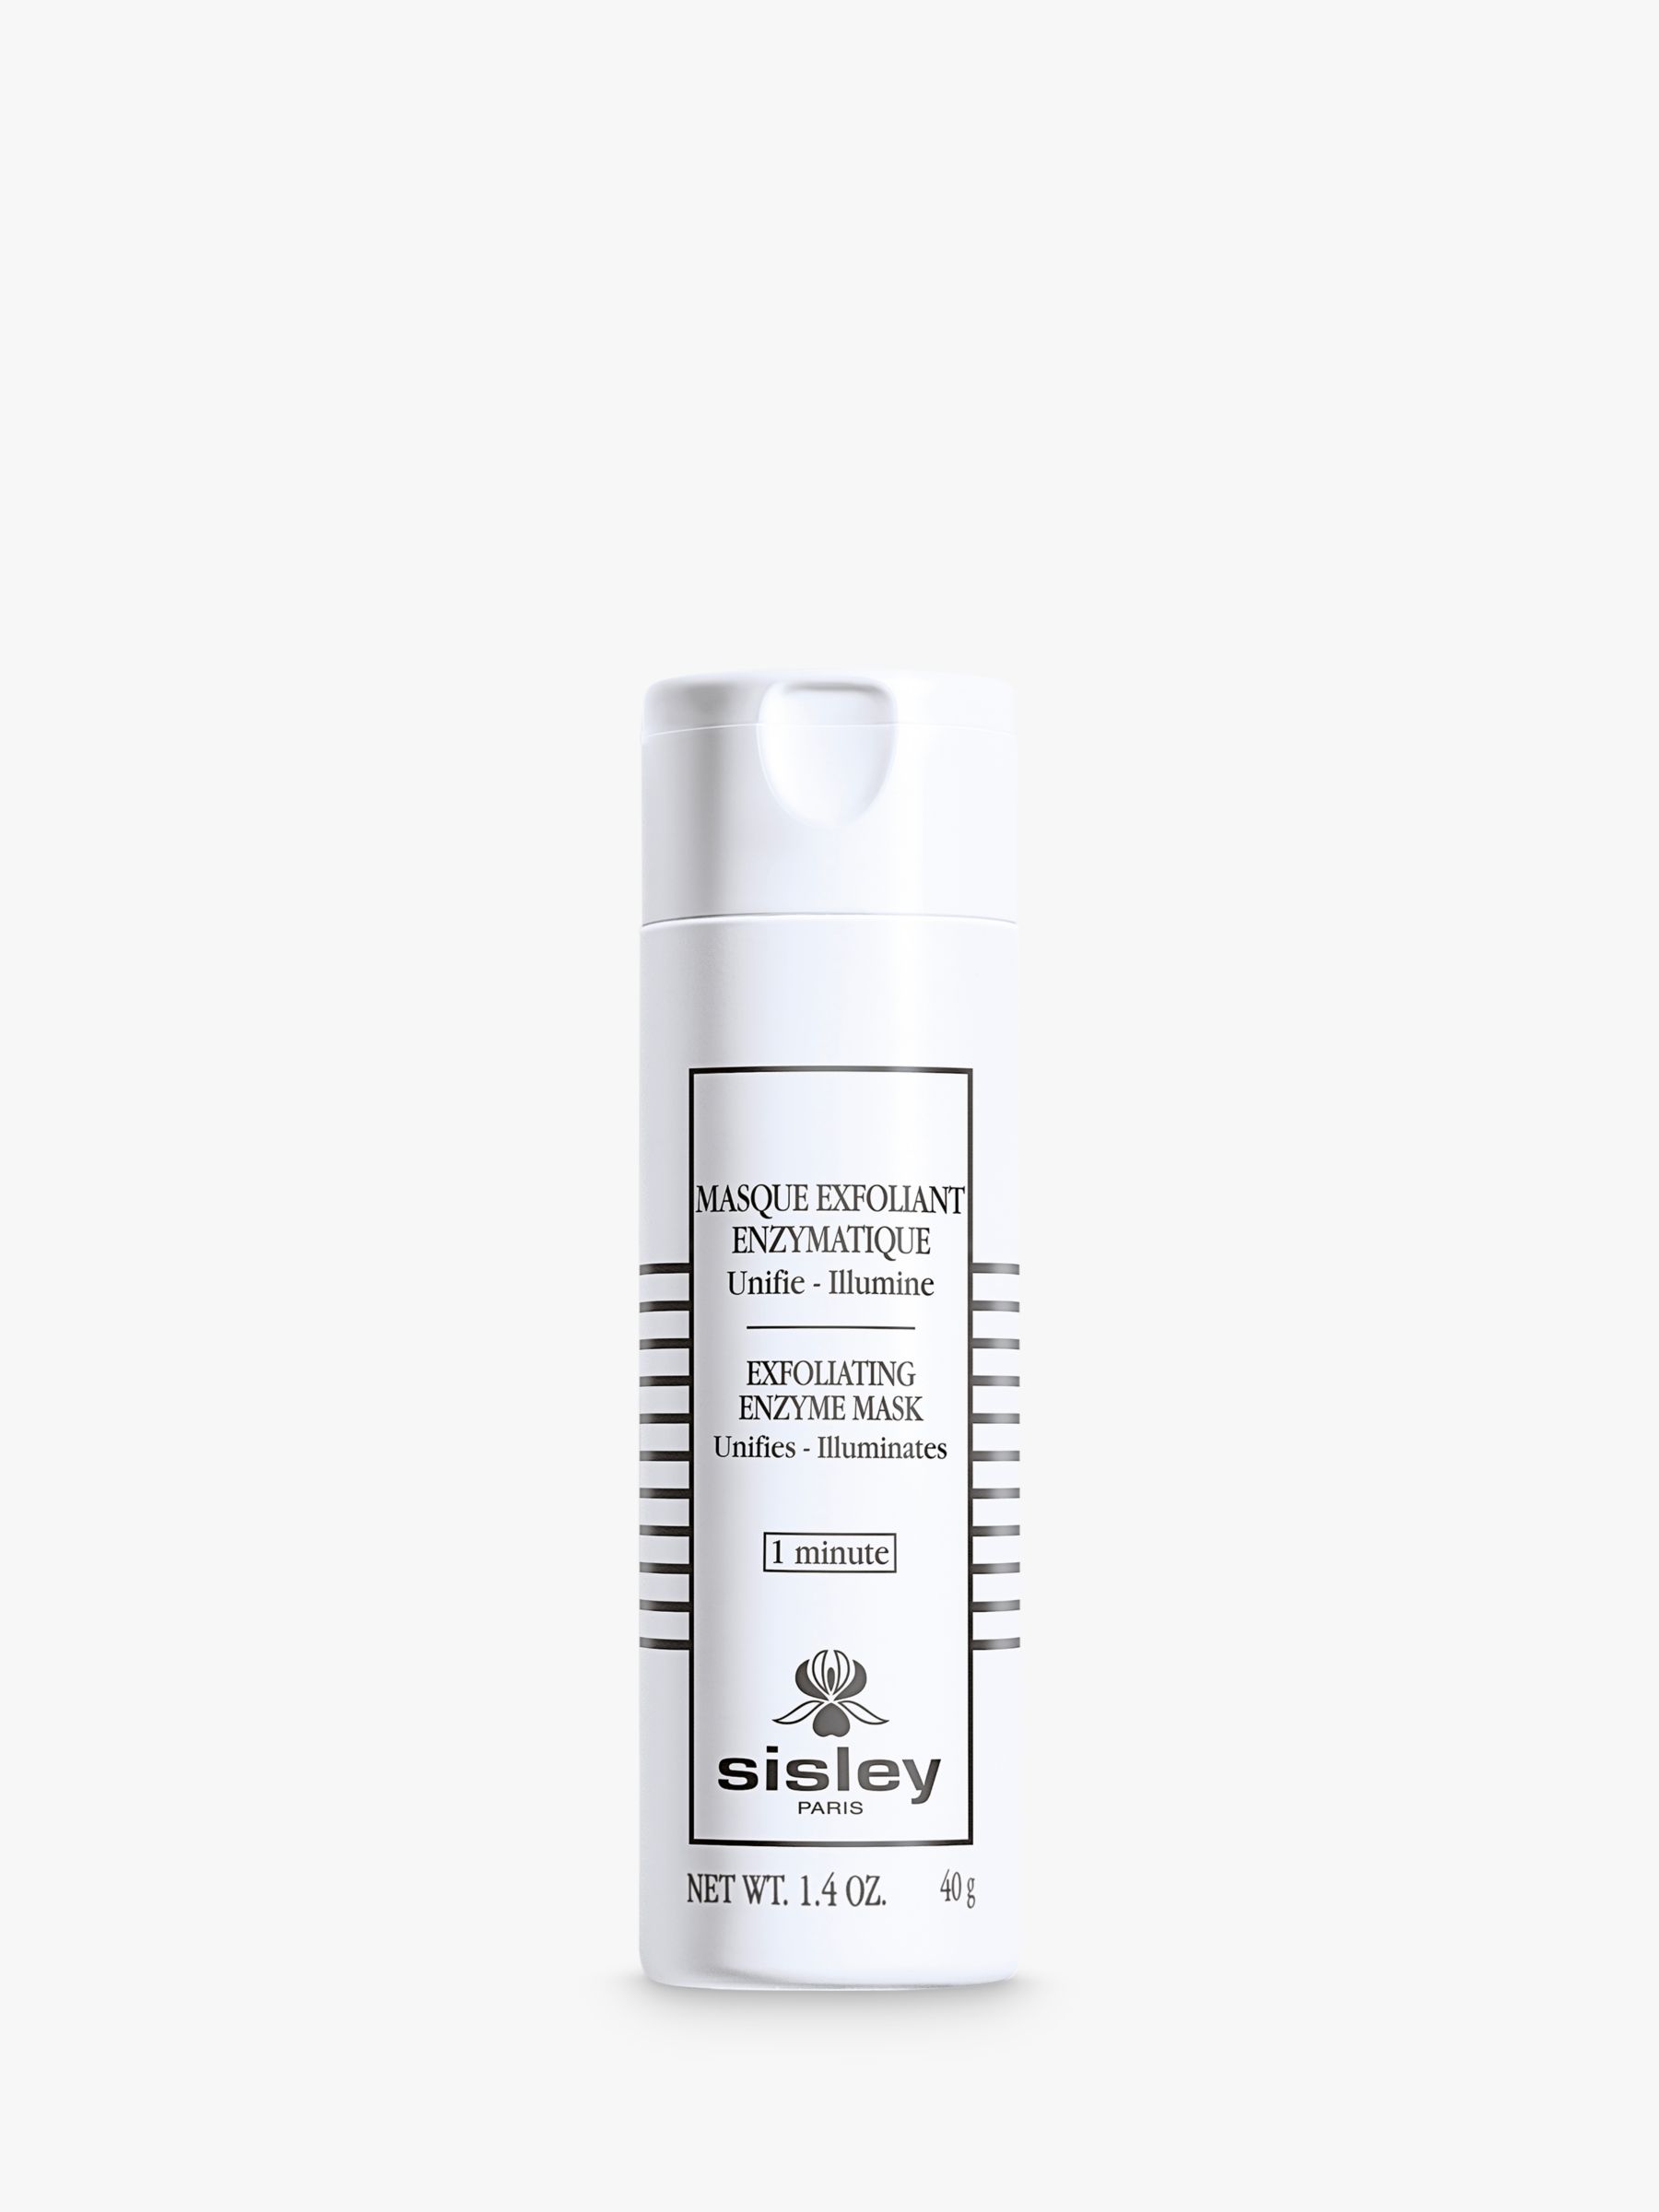 Sisley-Paris Exfoliating Enzyme Mask, 40g 1